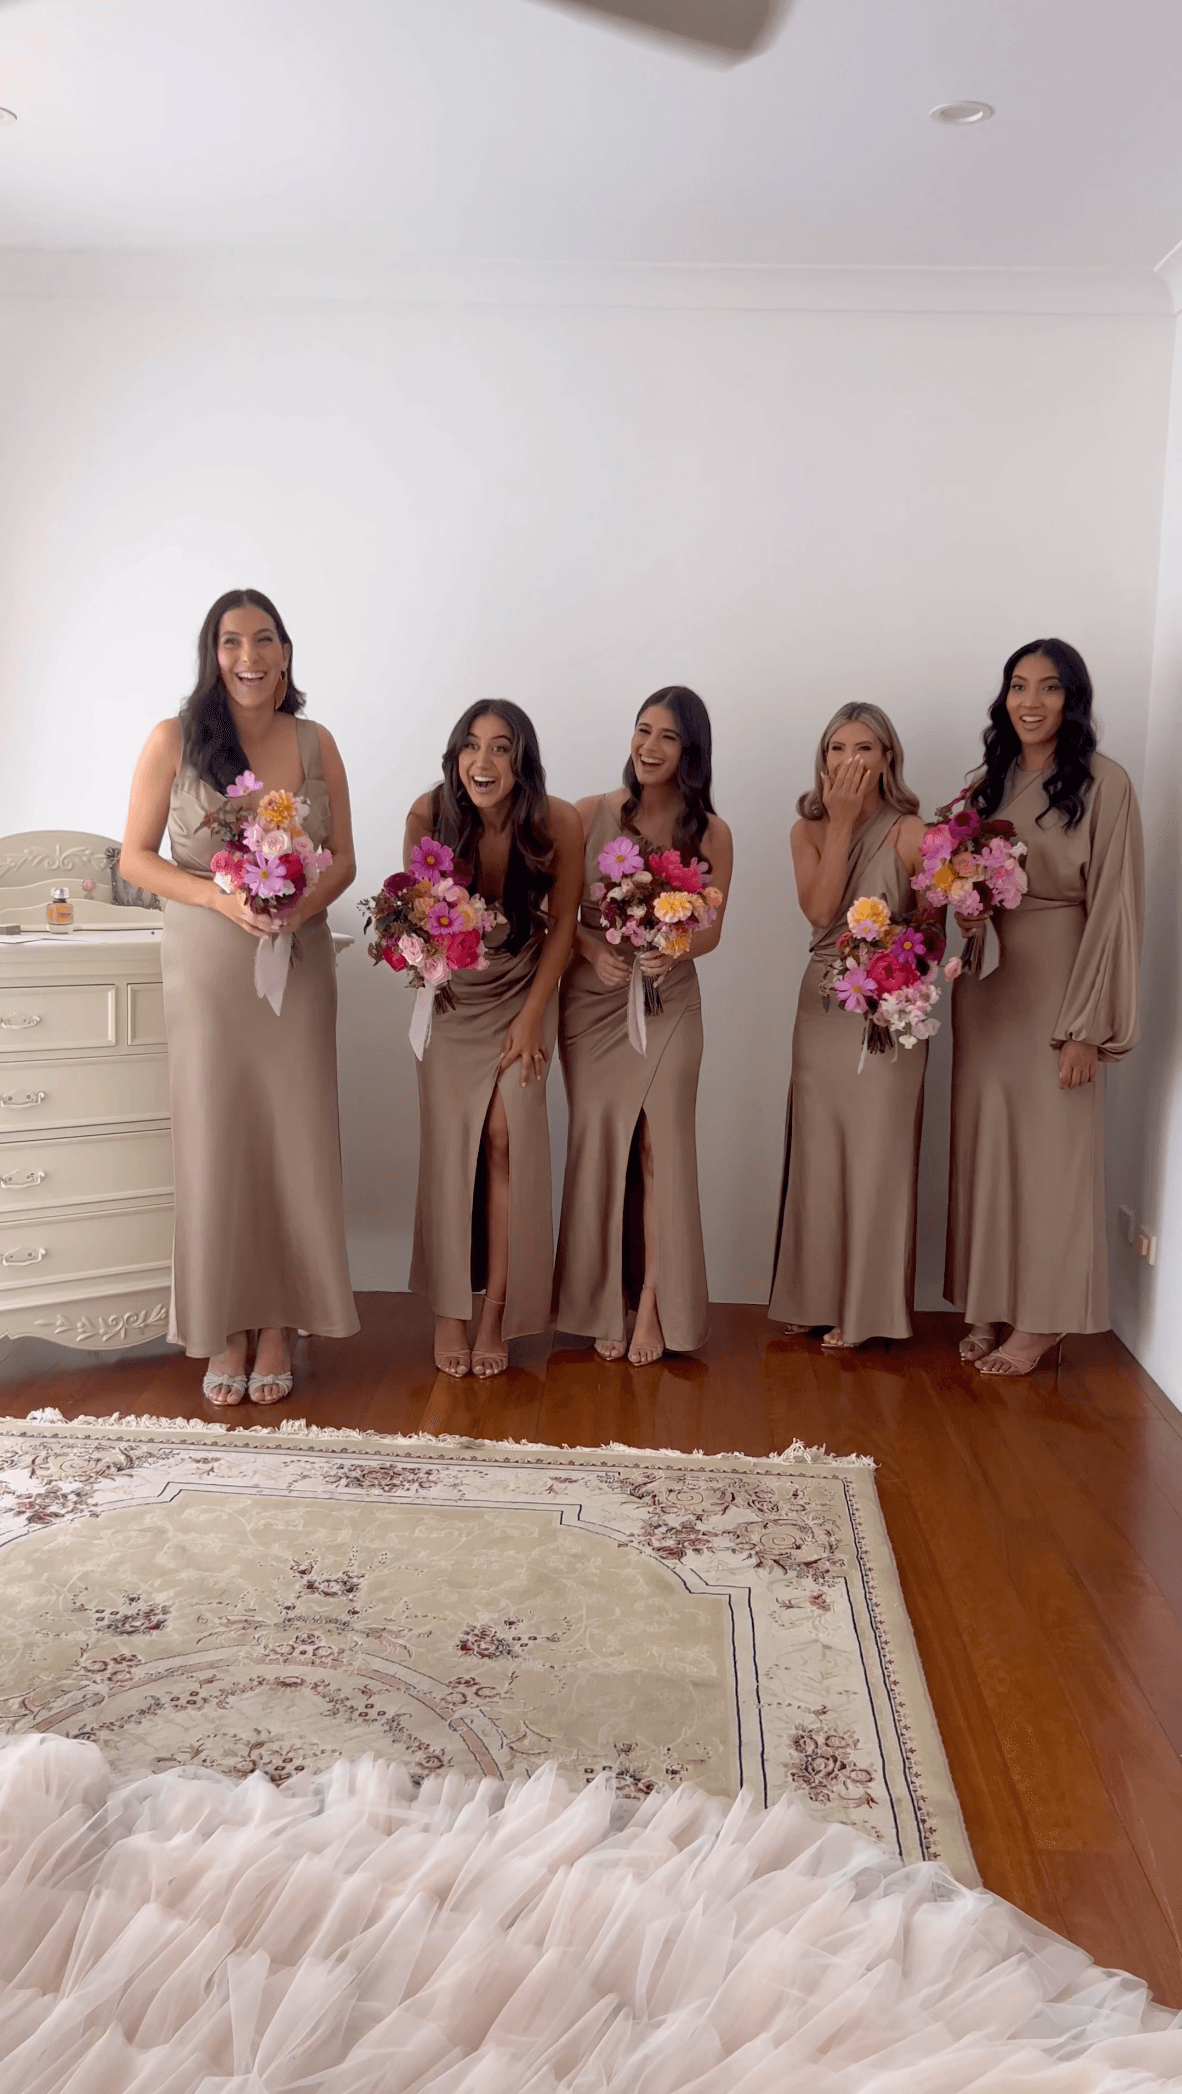 Mrs. Fernandez's bridesmaids on seeing her wedding dress for the first time. (Courtesy of <a href="https://www.instagram.com/jasmyn/">Jasmine Fernandez</a>)